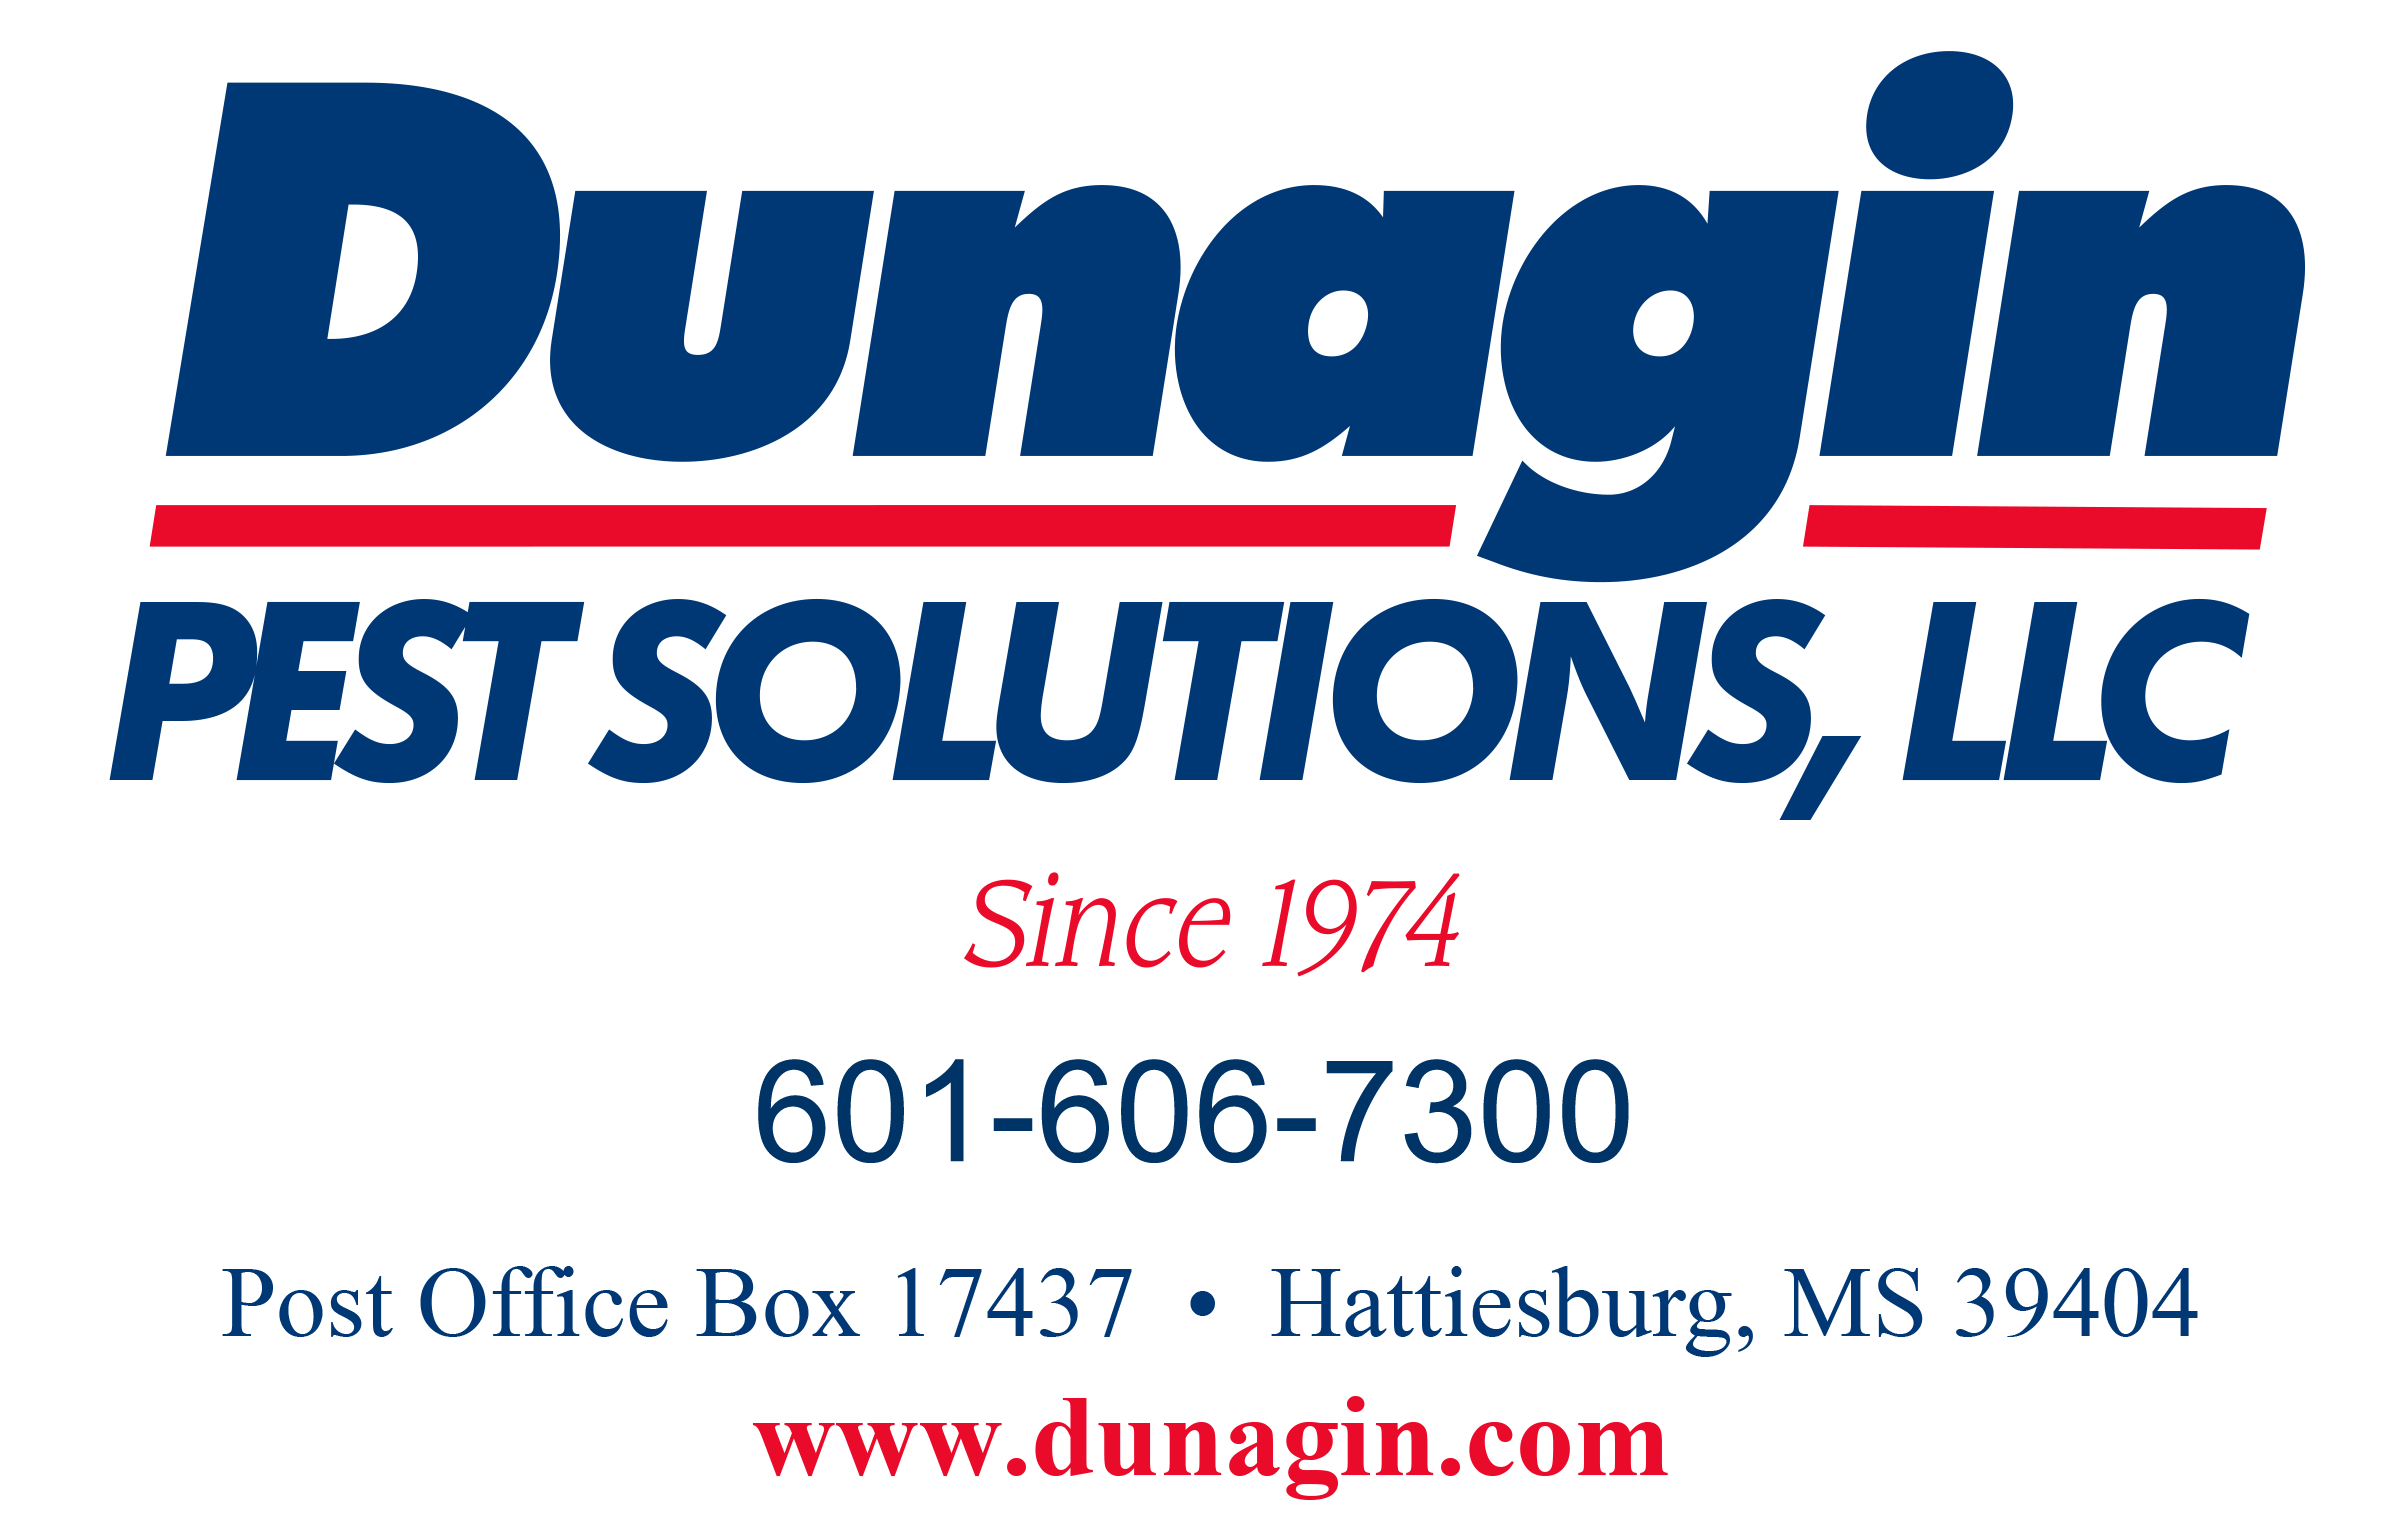 Dunagin Pest Solutions